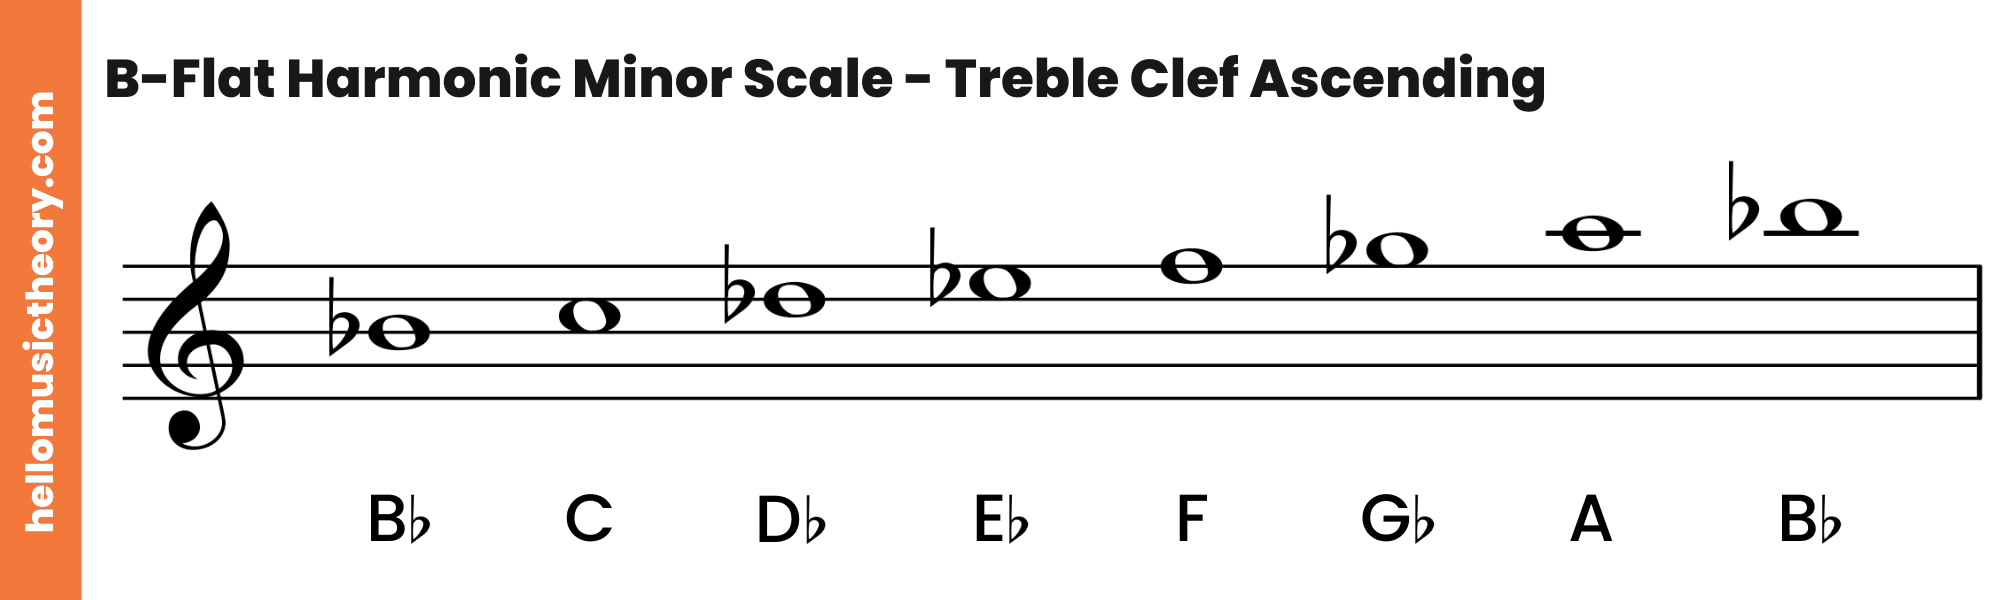 B-Flat Harmonic Minor Scale Treble Clef Ascending